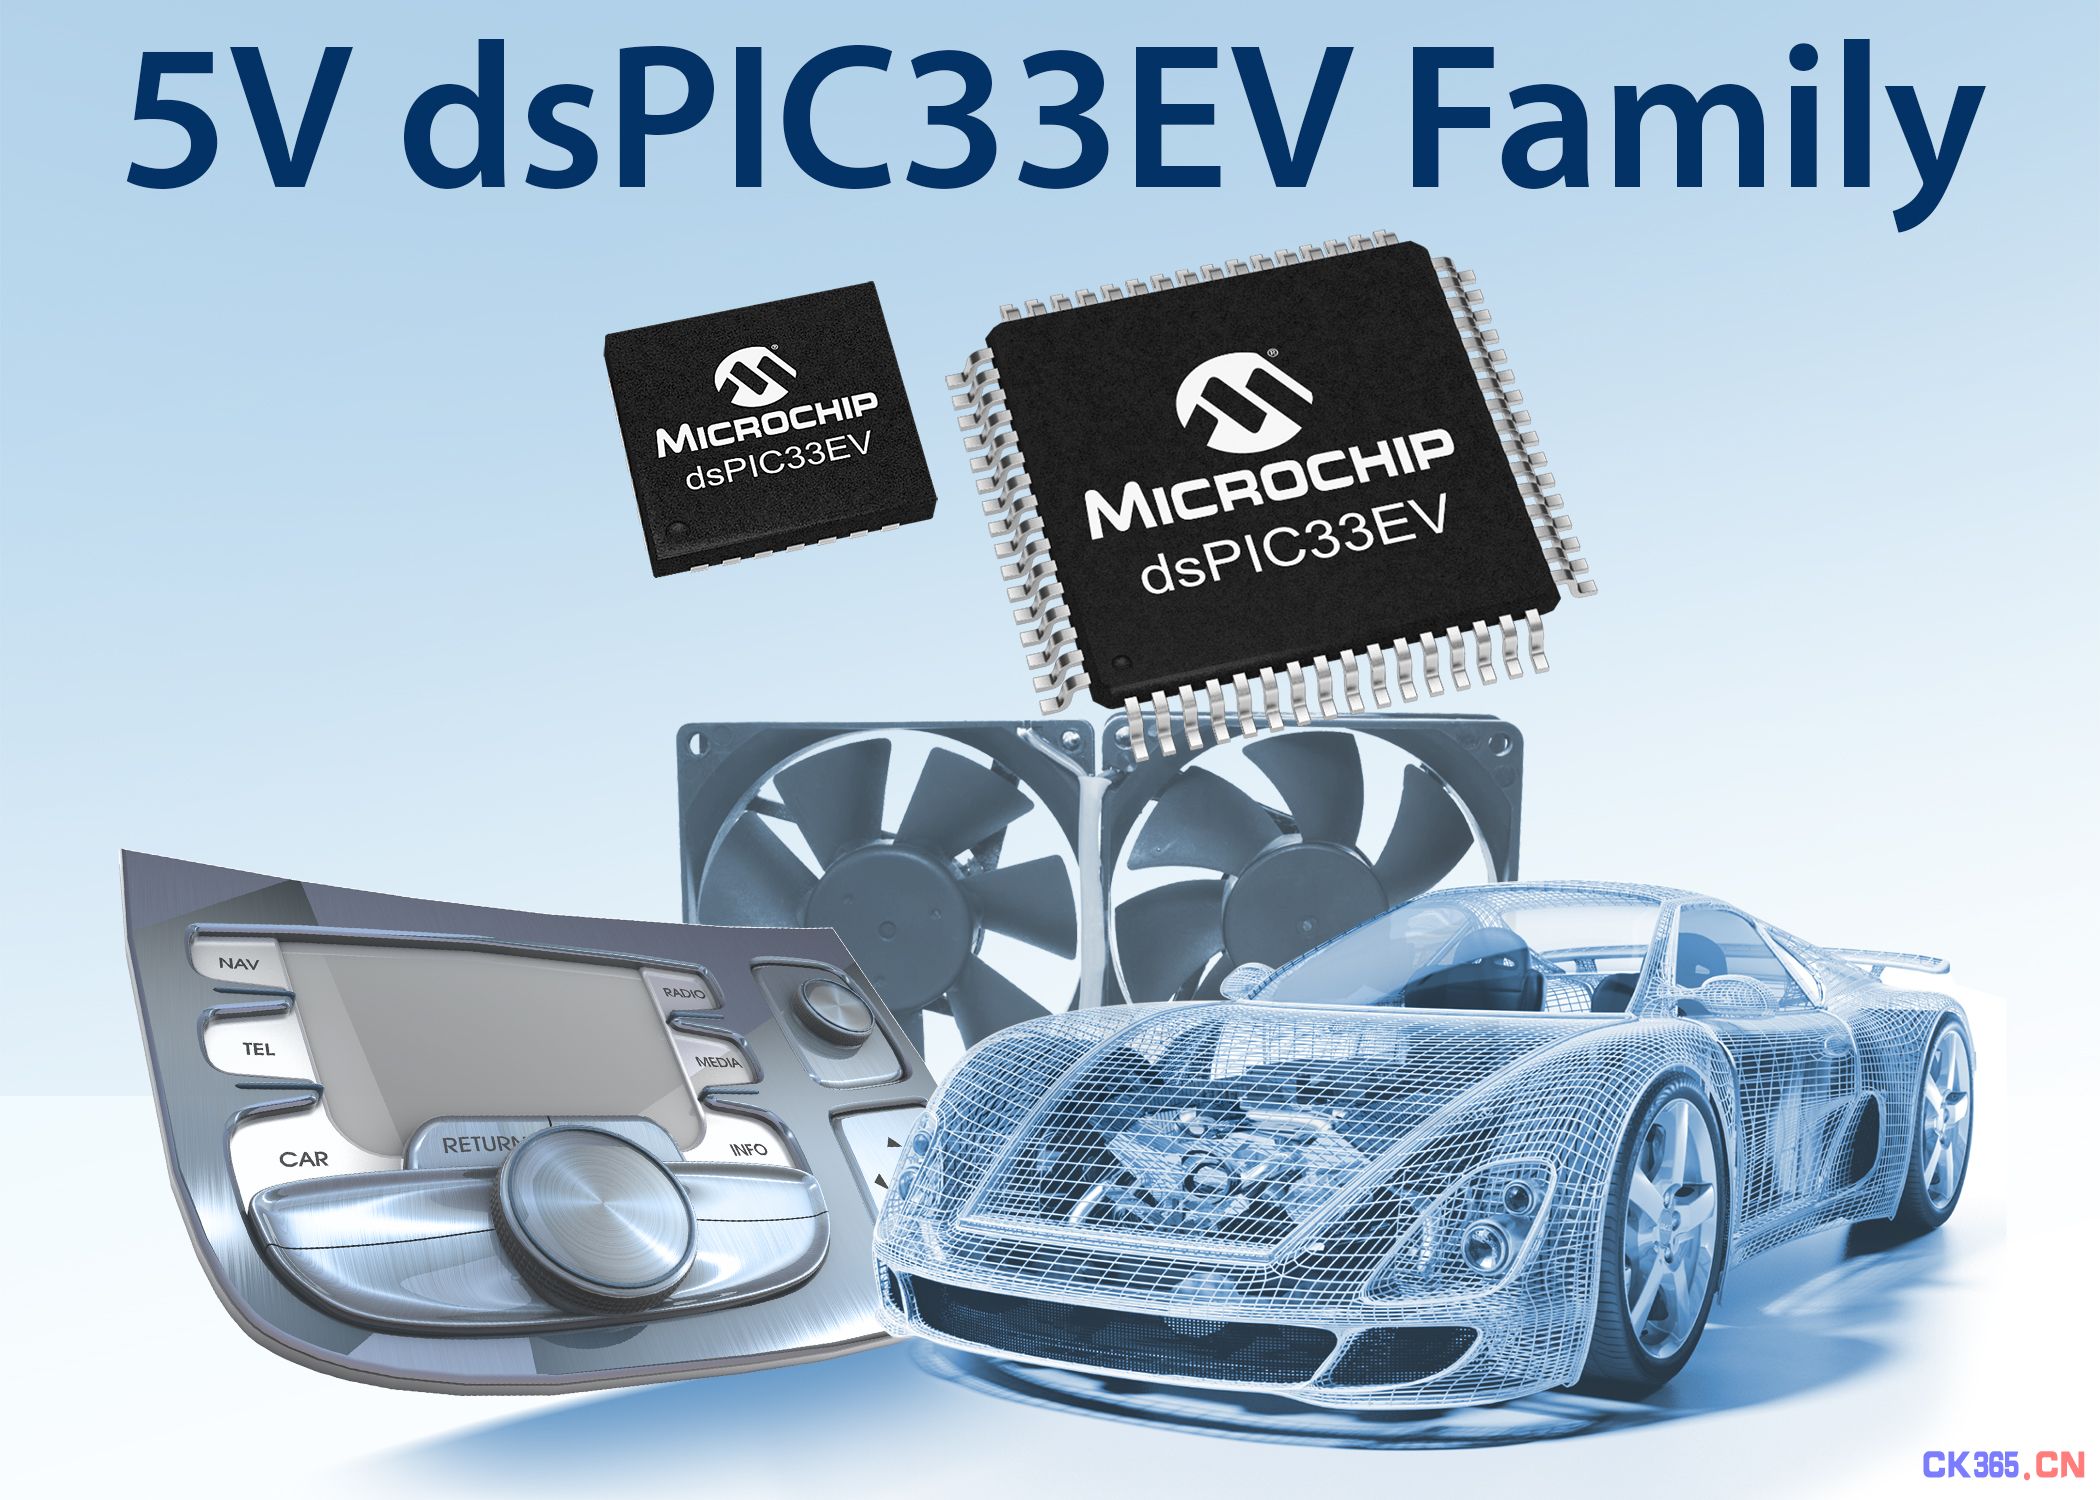 Microchip推出全新5V dsPIC33 “EV”系列，卓越的抗噪性与稳健性打破恶劣环境制约